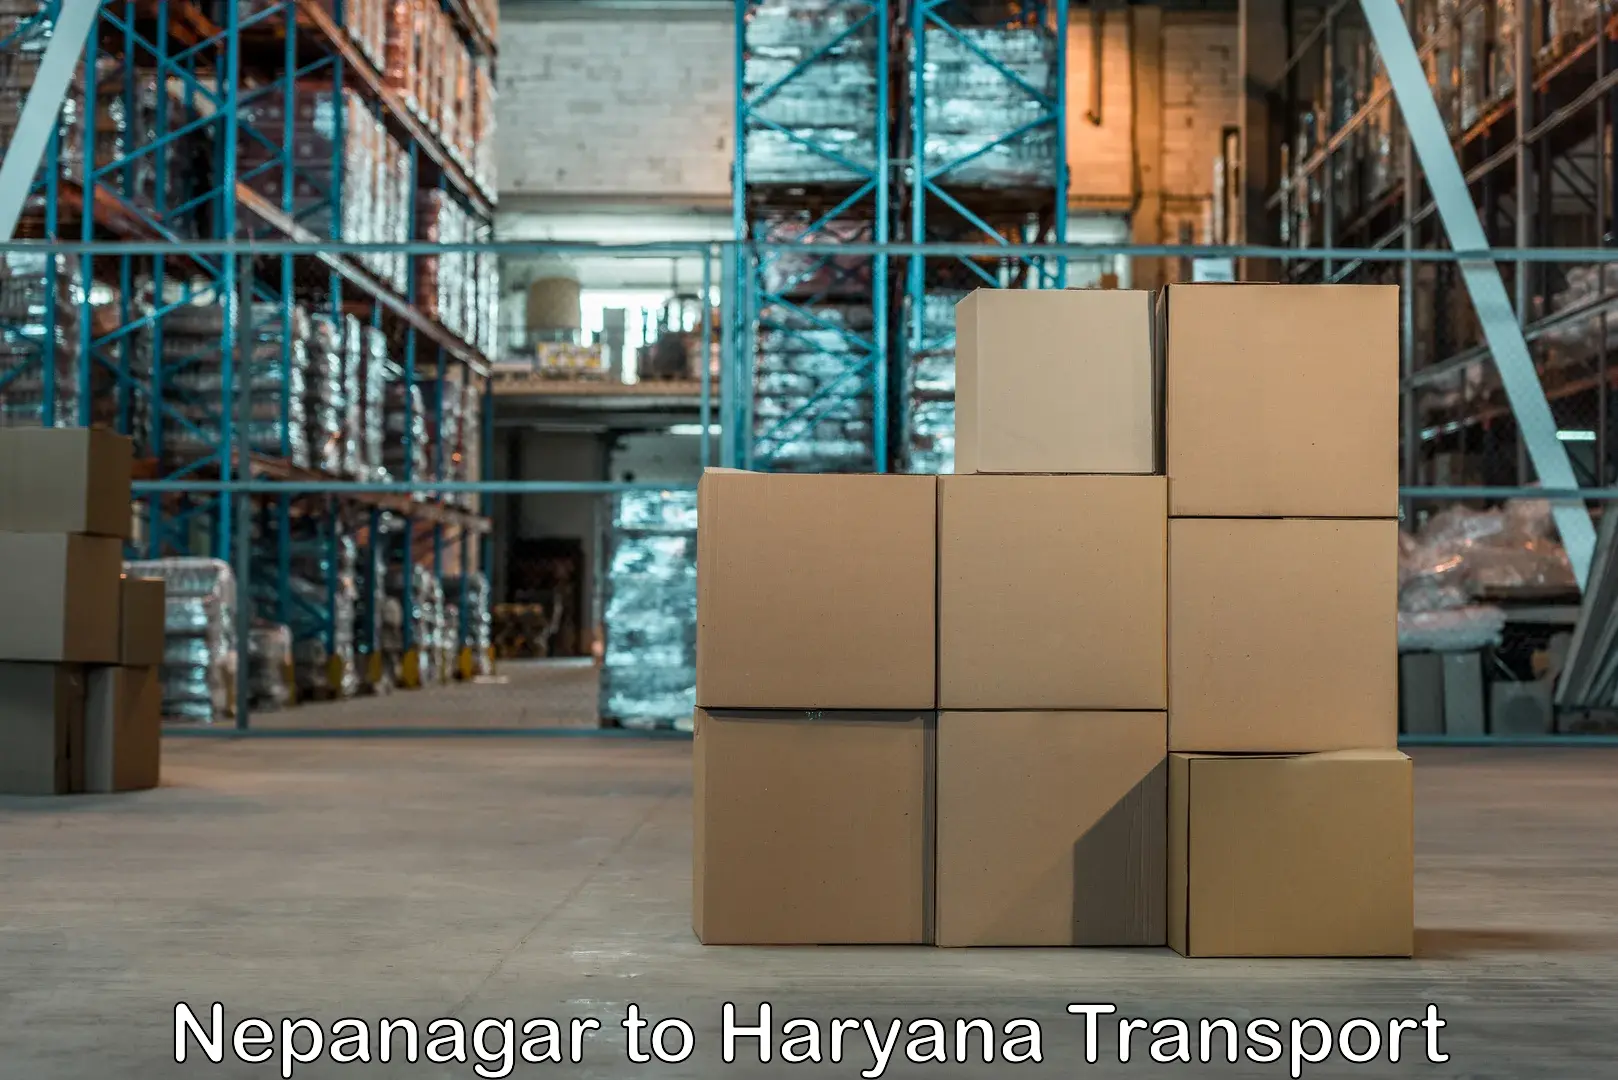 Truck transport companies in India Nepanagar to Gurgaon